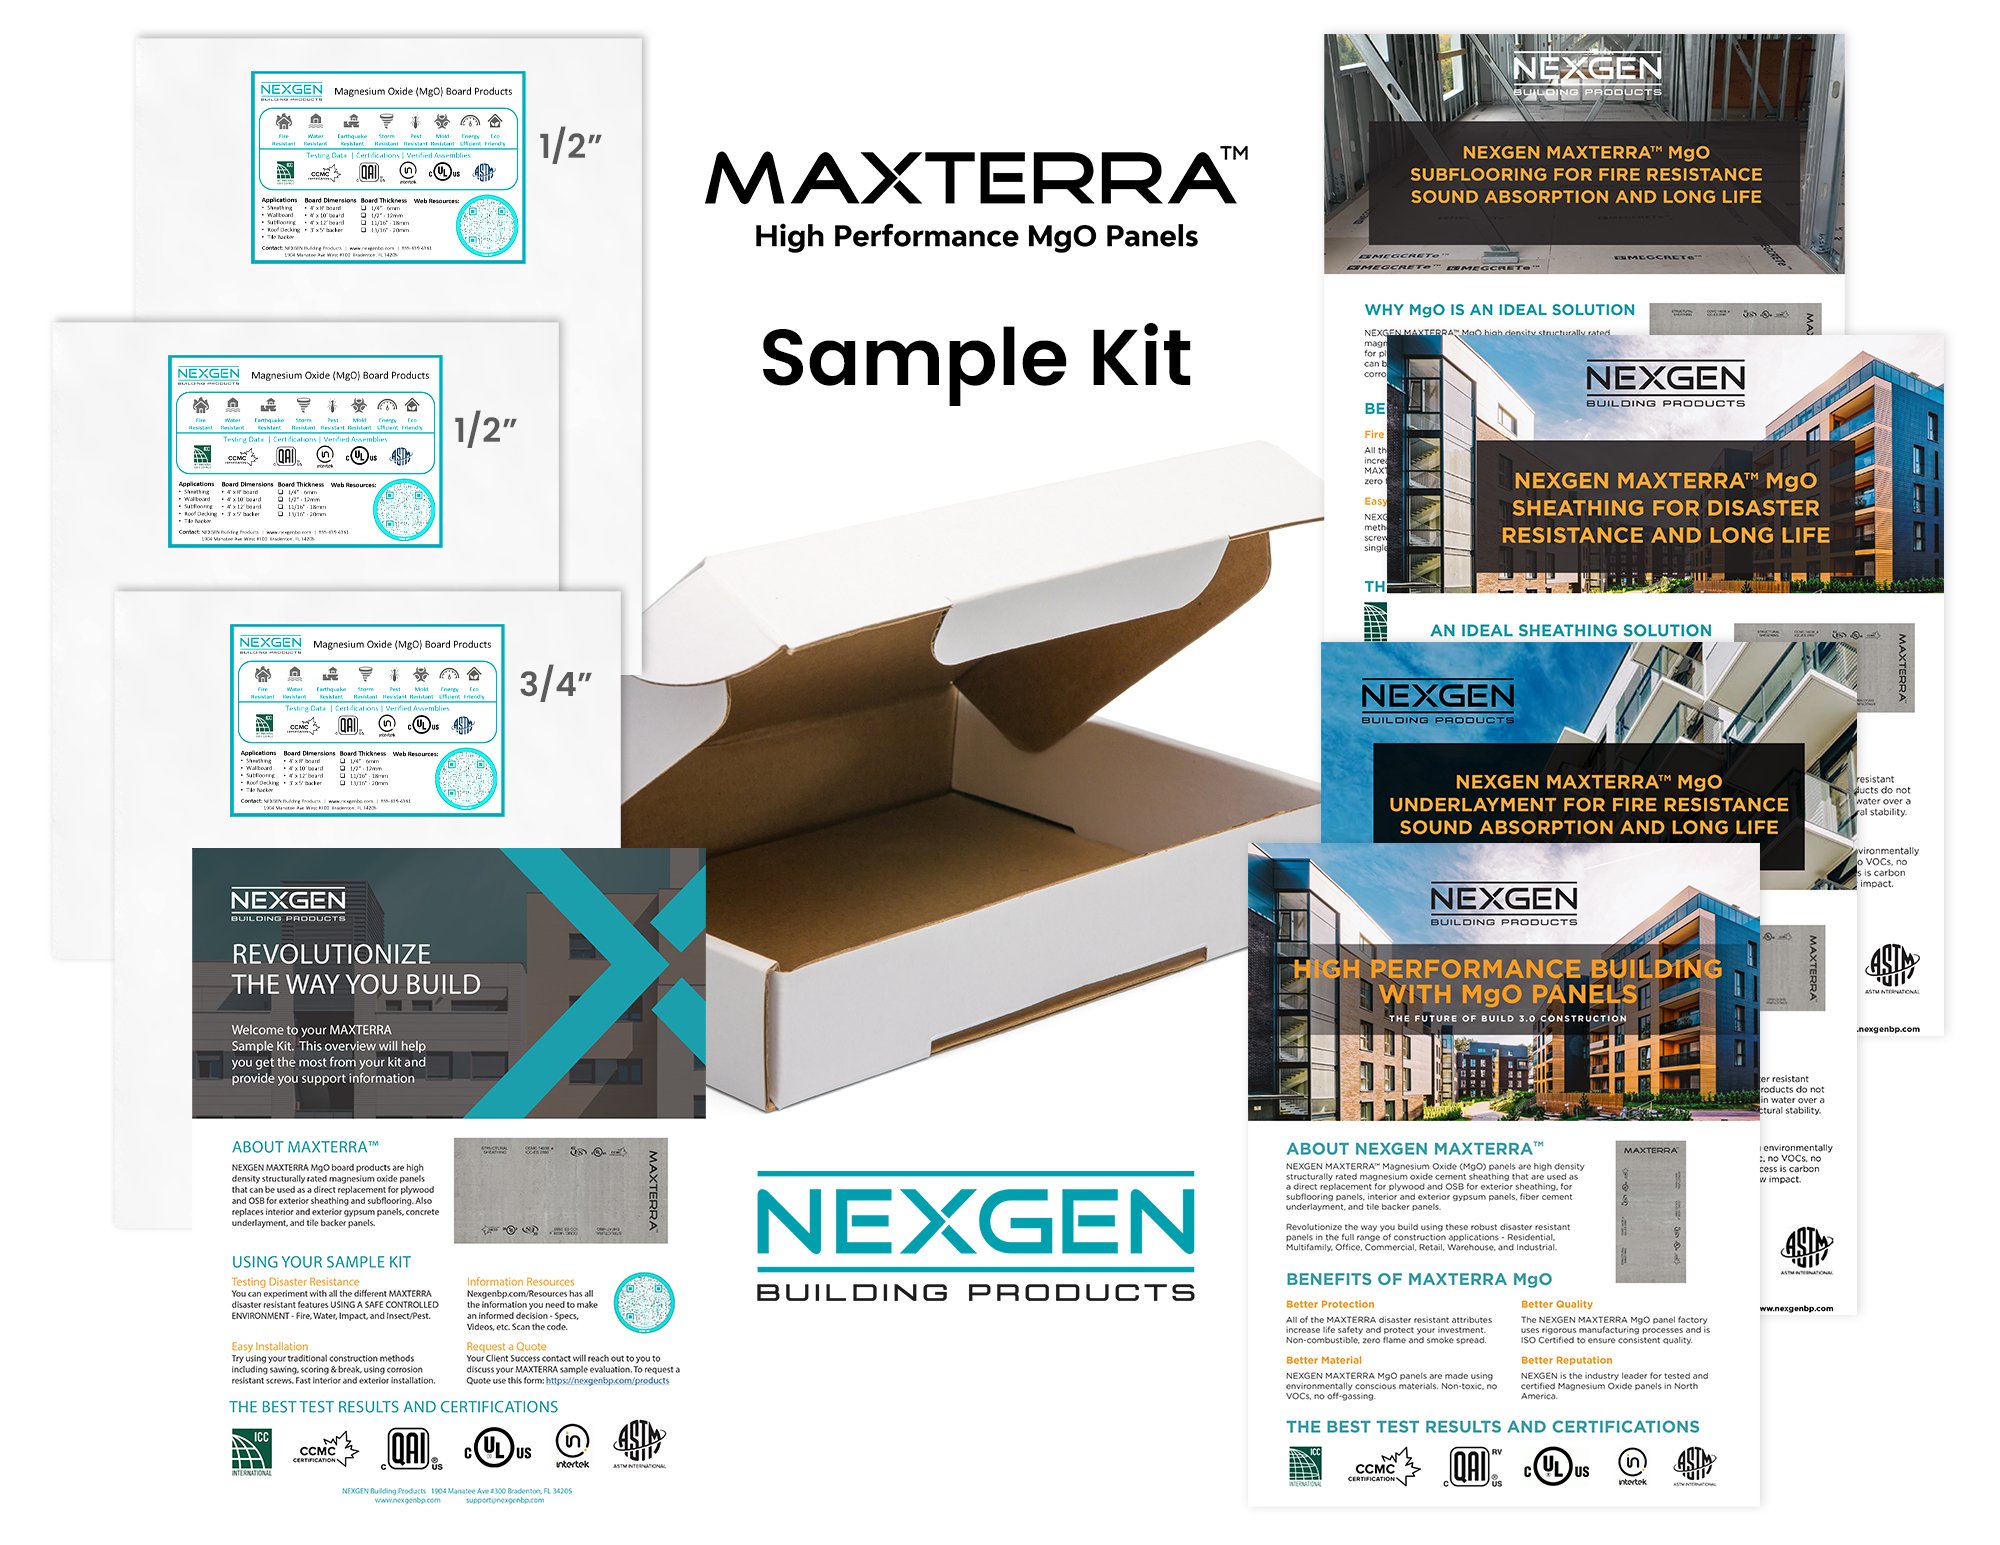 MAXTERRA Sample Kit Image with box